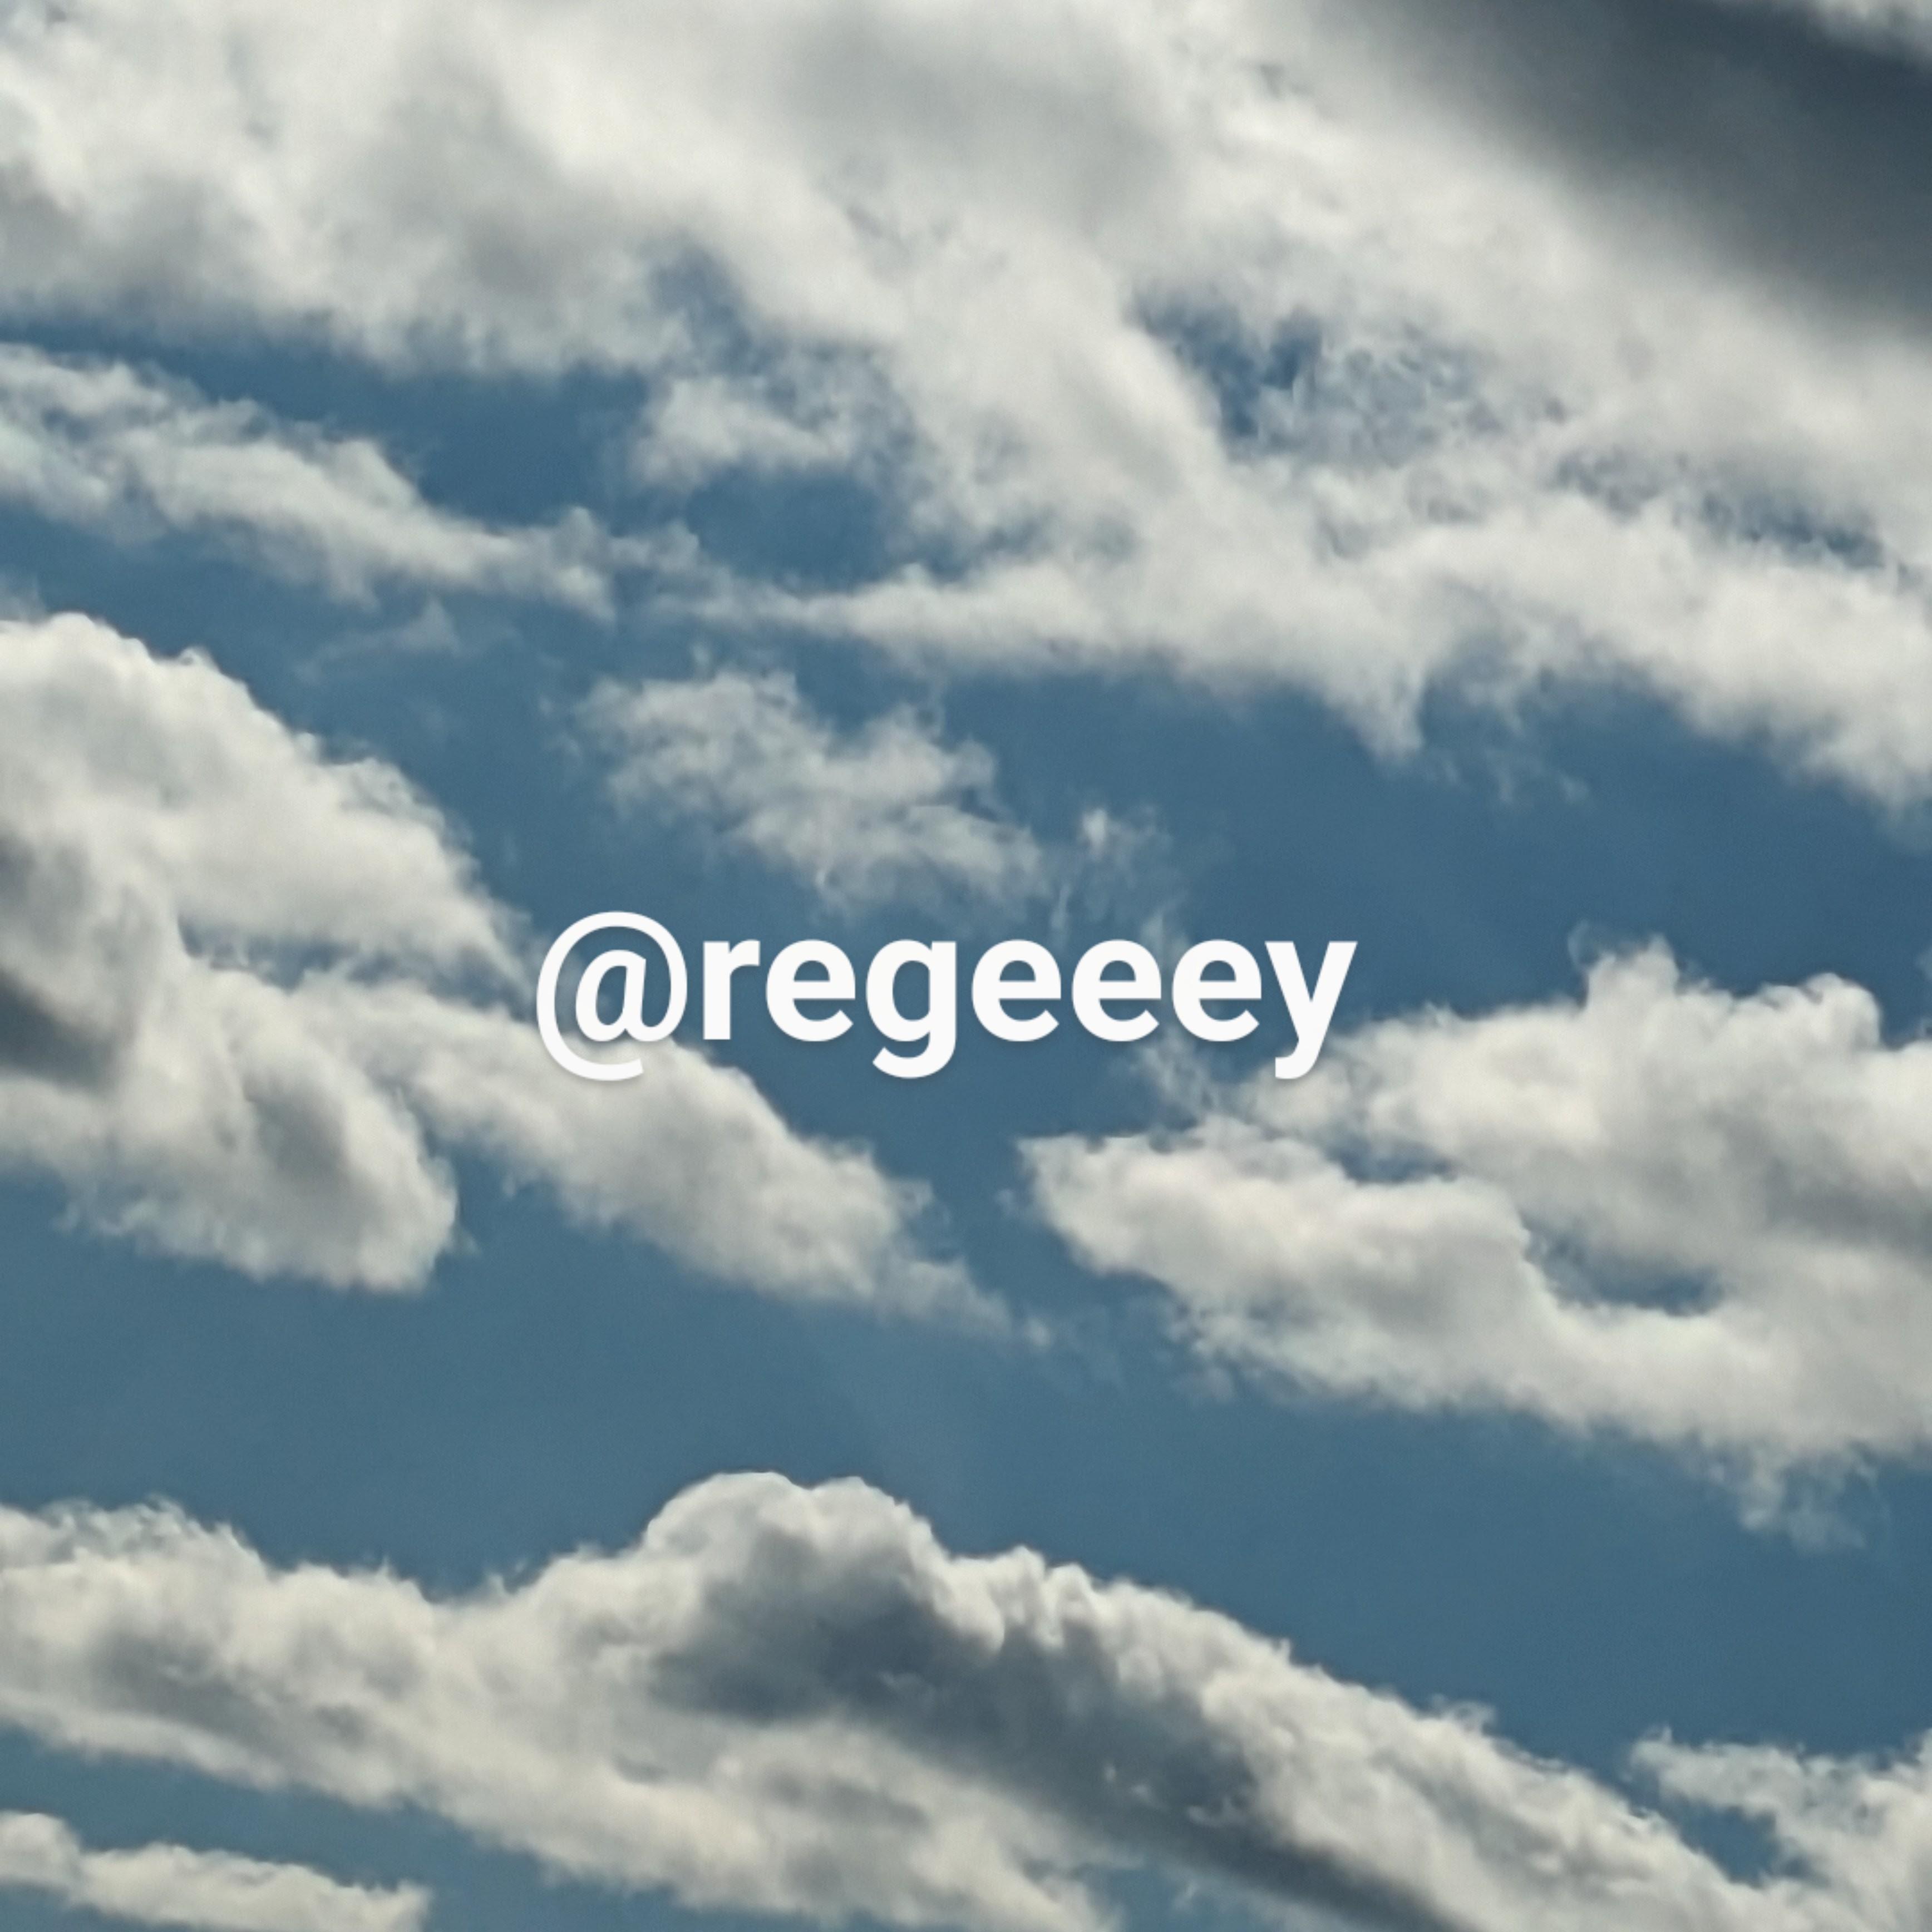 regeeey's images